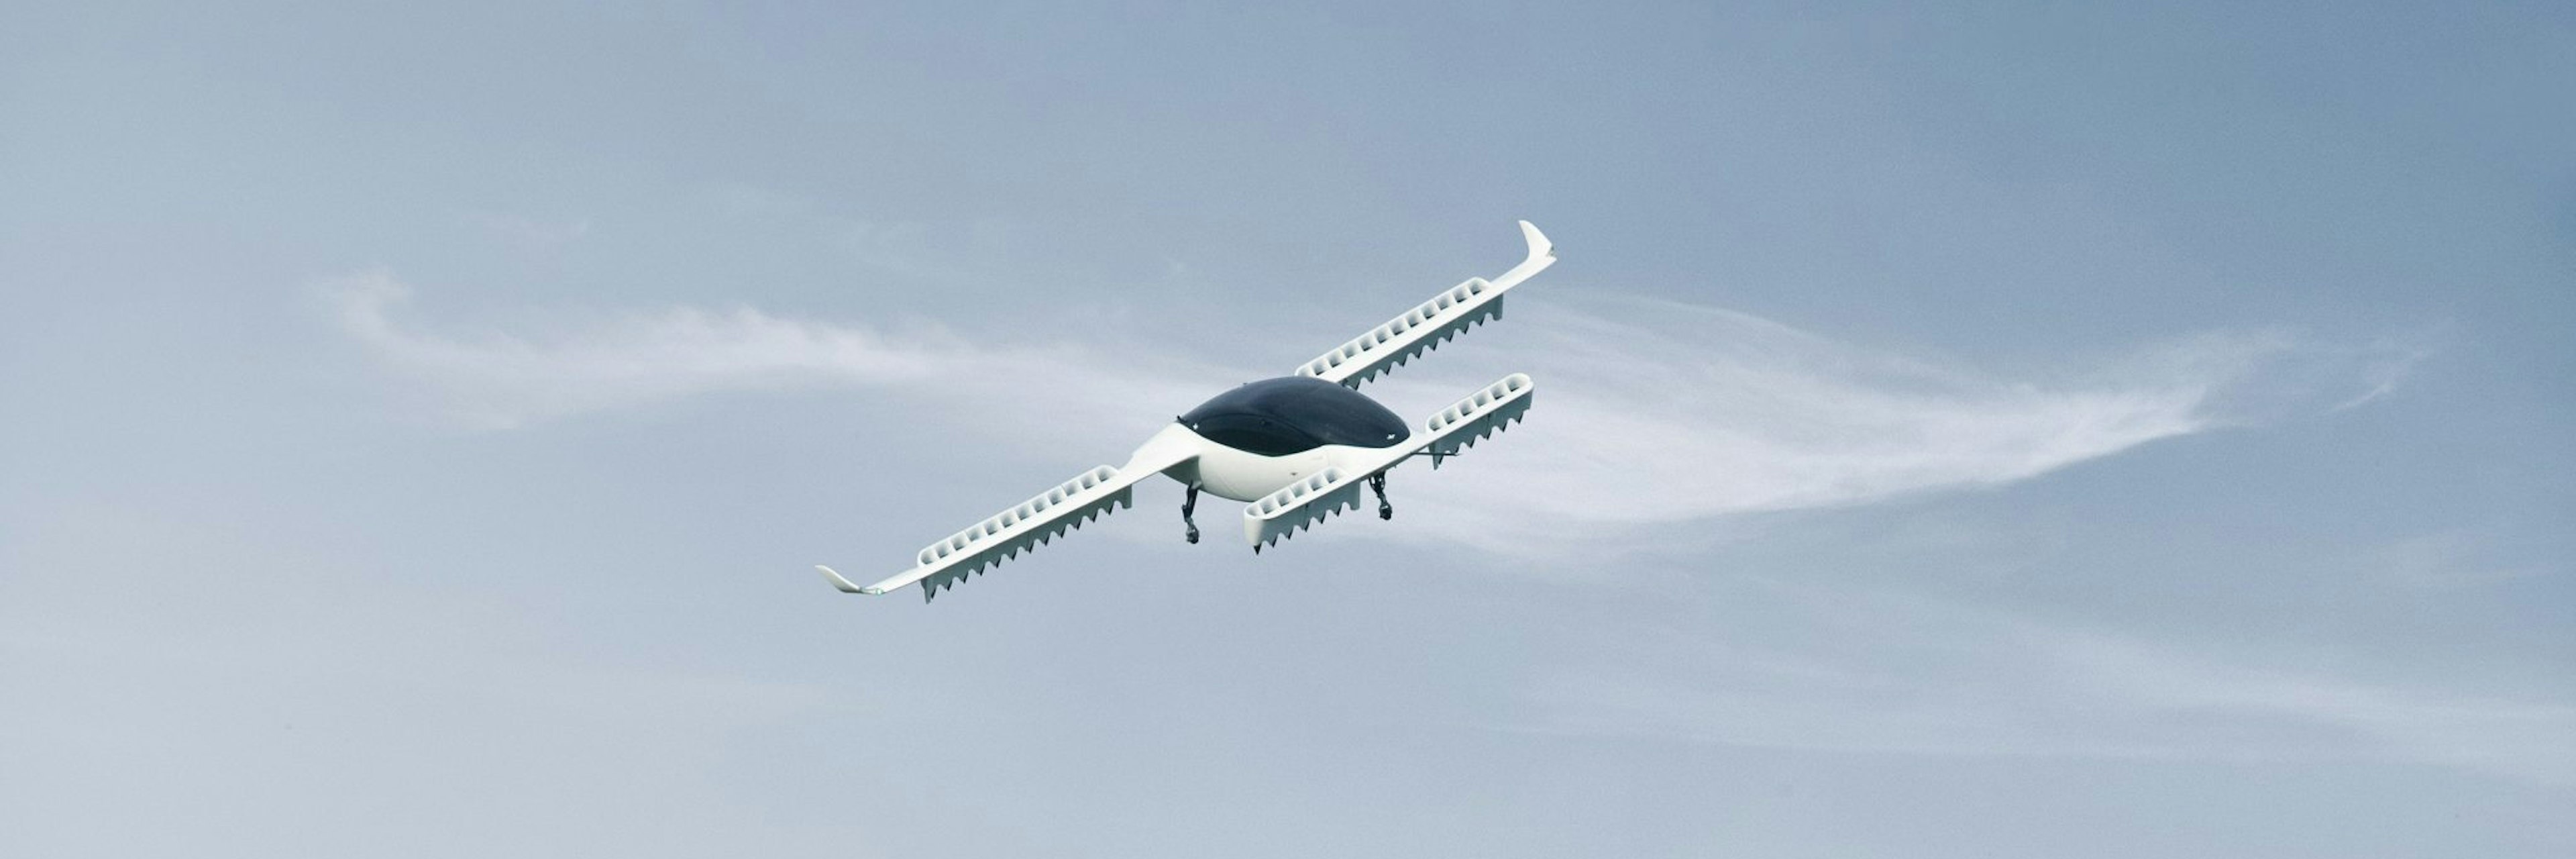 Image of Lilium Jet prototype plane flying